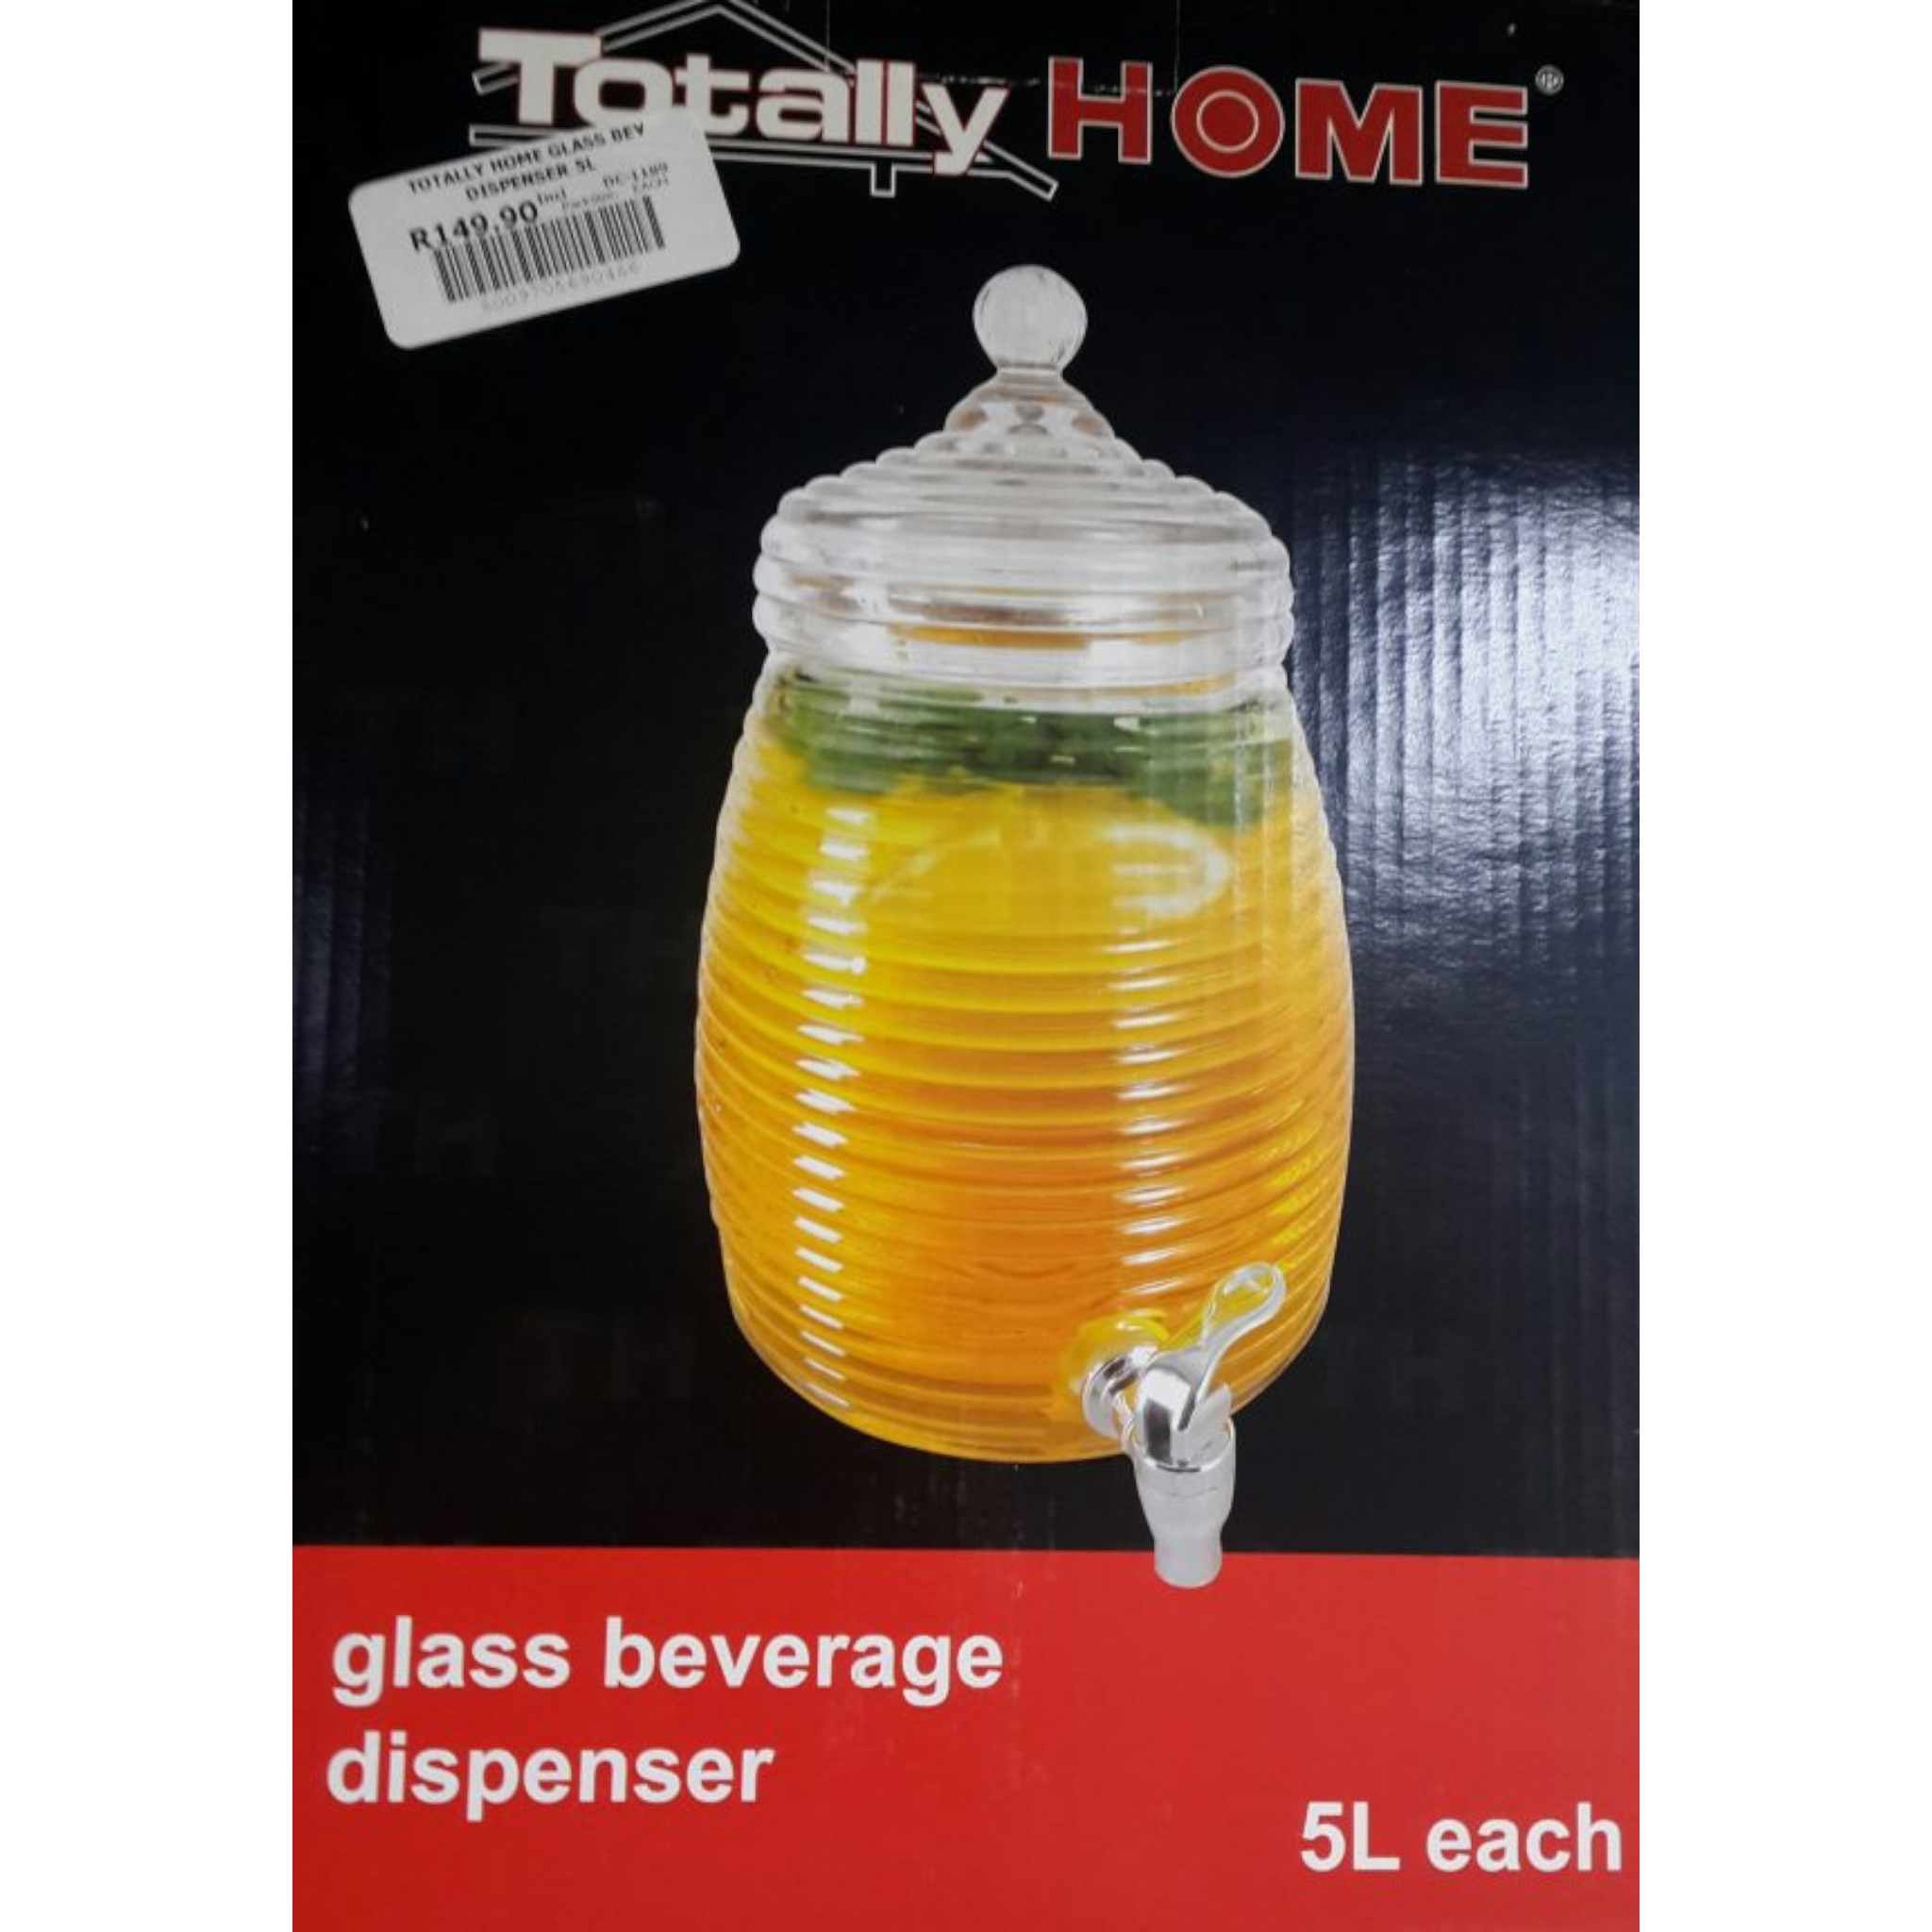 Totally Home 5L Glass Beverage Dispenser TH104